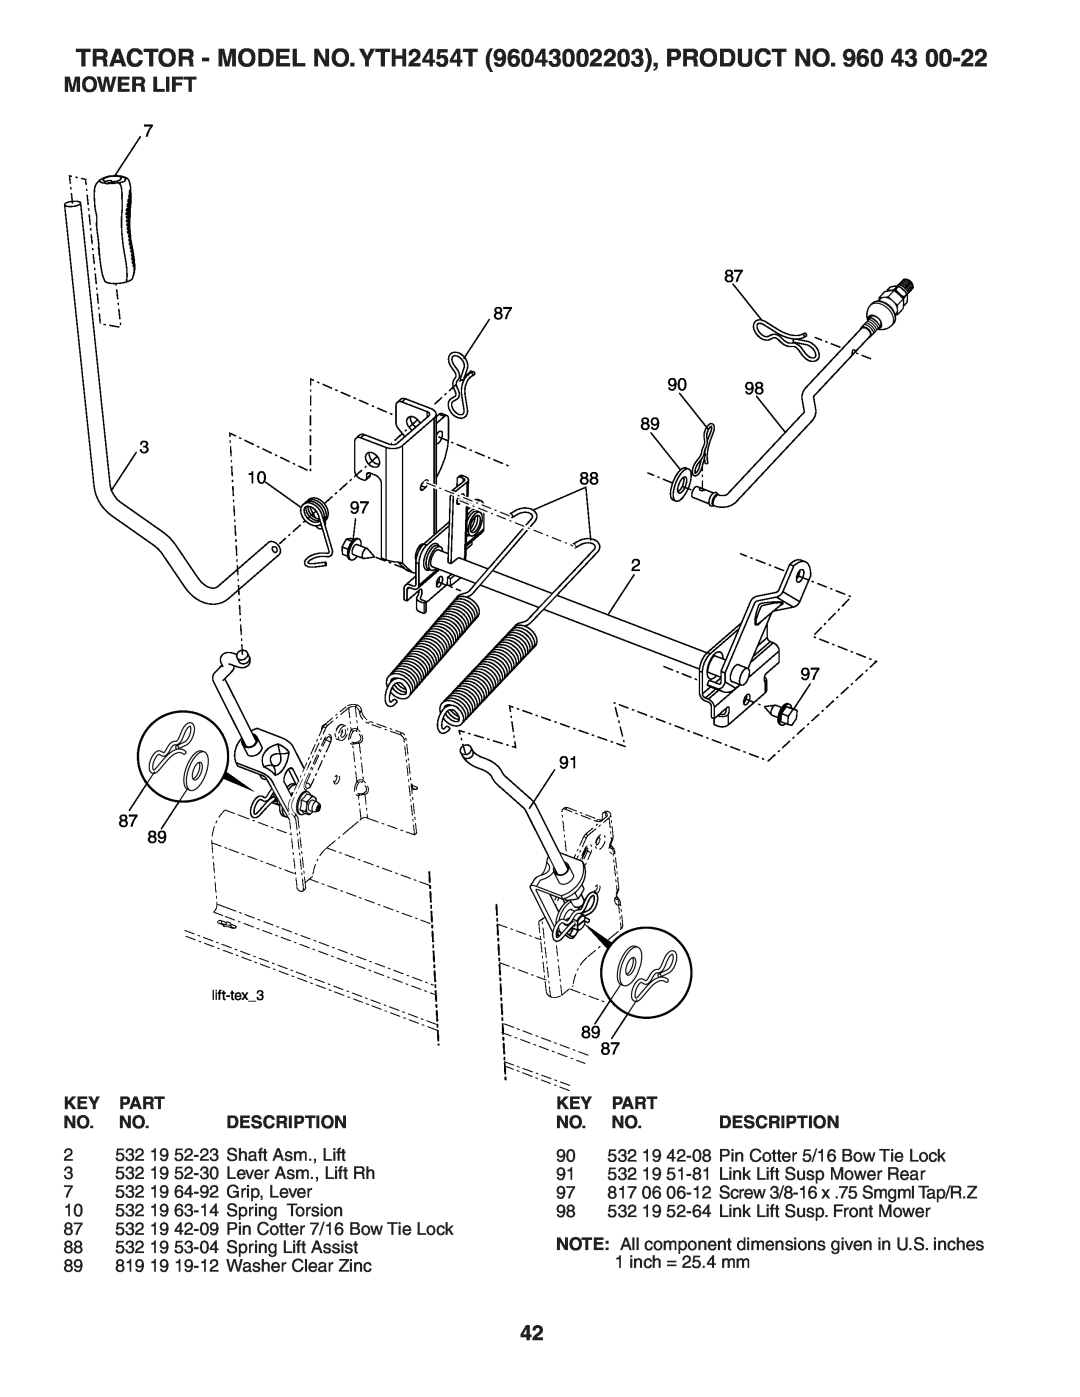 Husqvarna YTH2454T owner manual Mower Lift, Key Part No. No.Description 